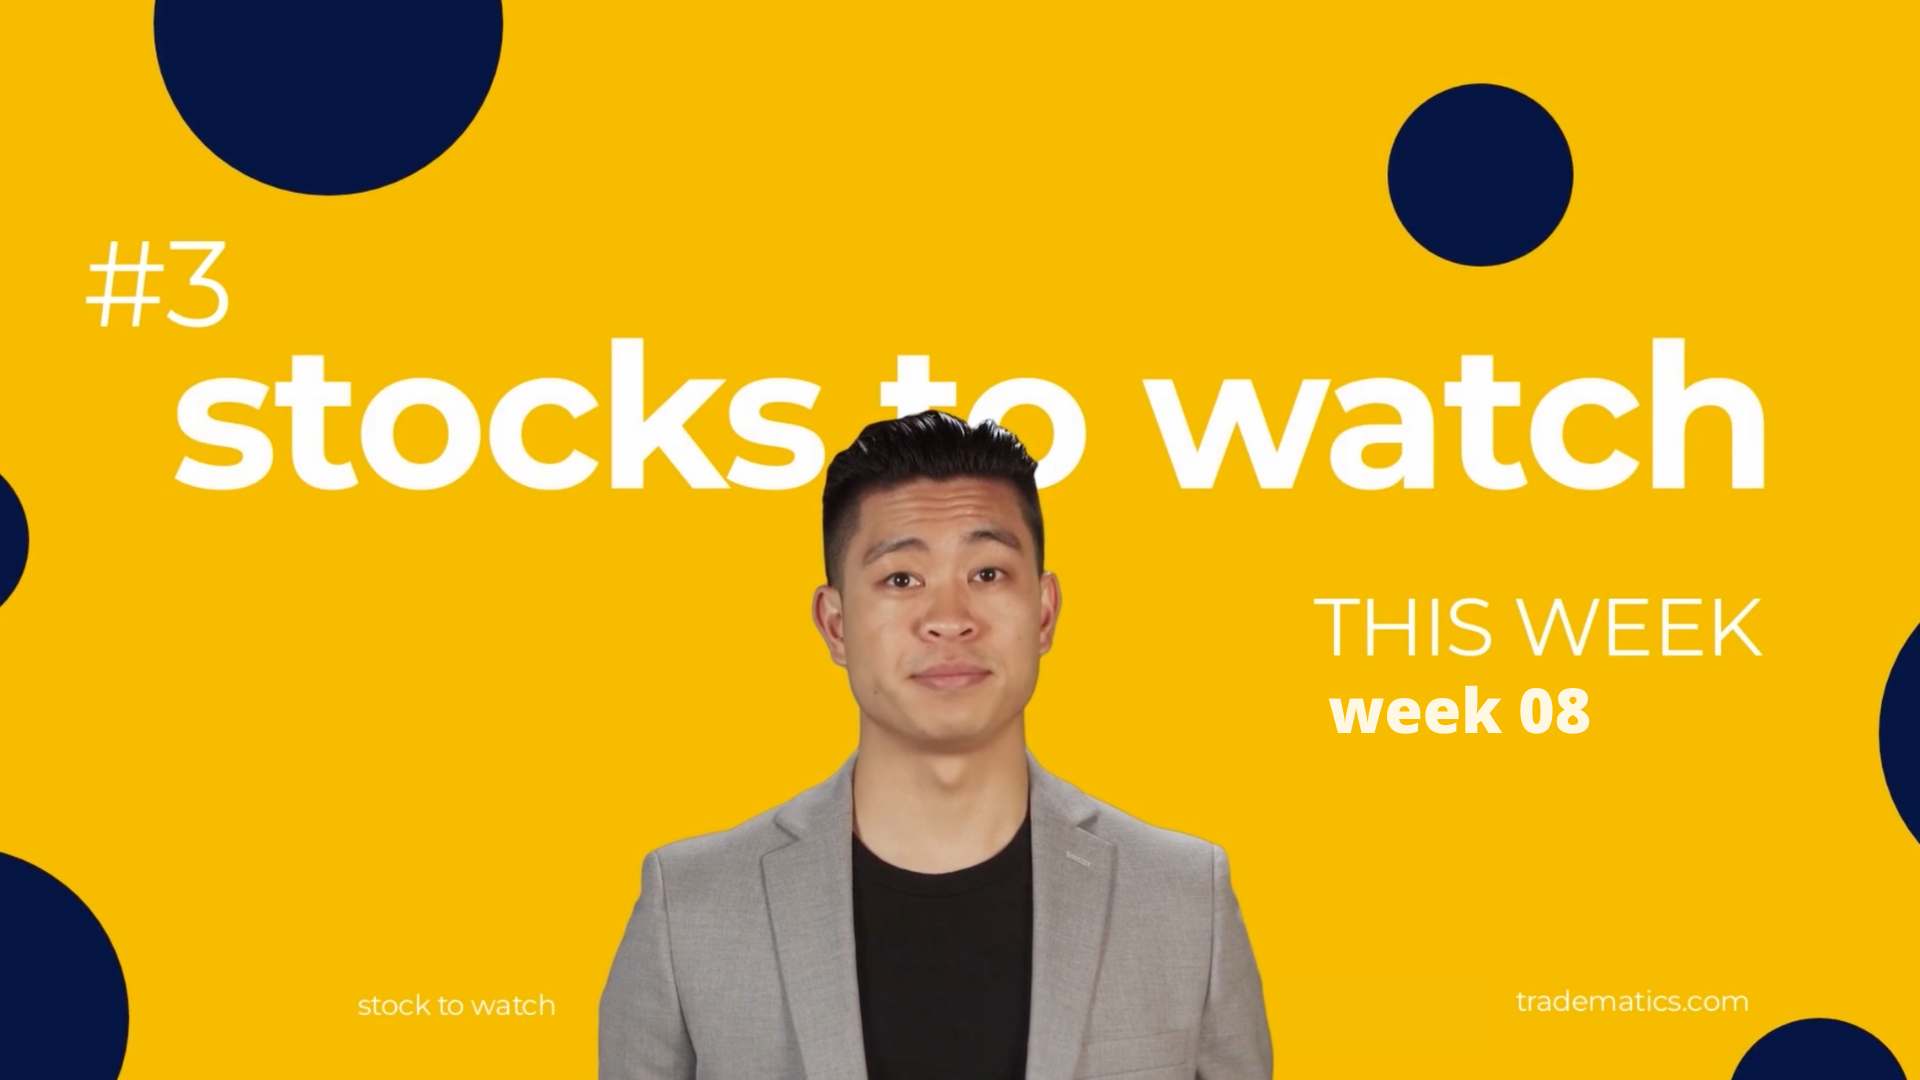 Tradematics | Stocks to Watch this week | week 08